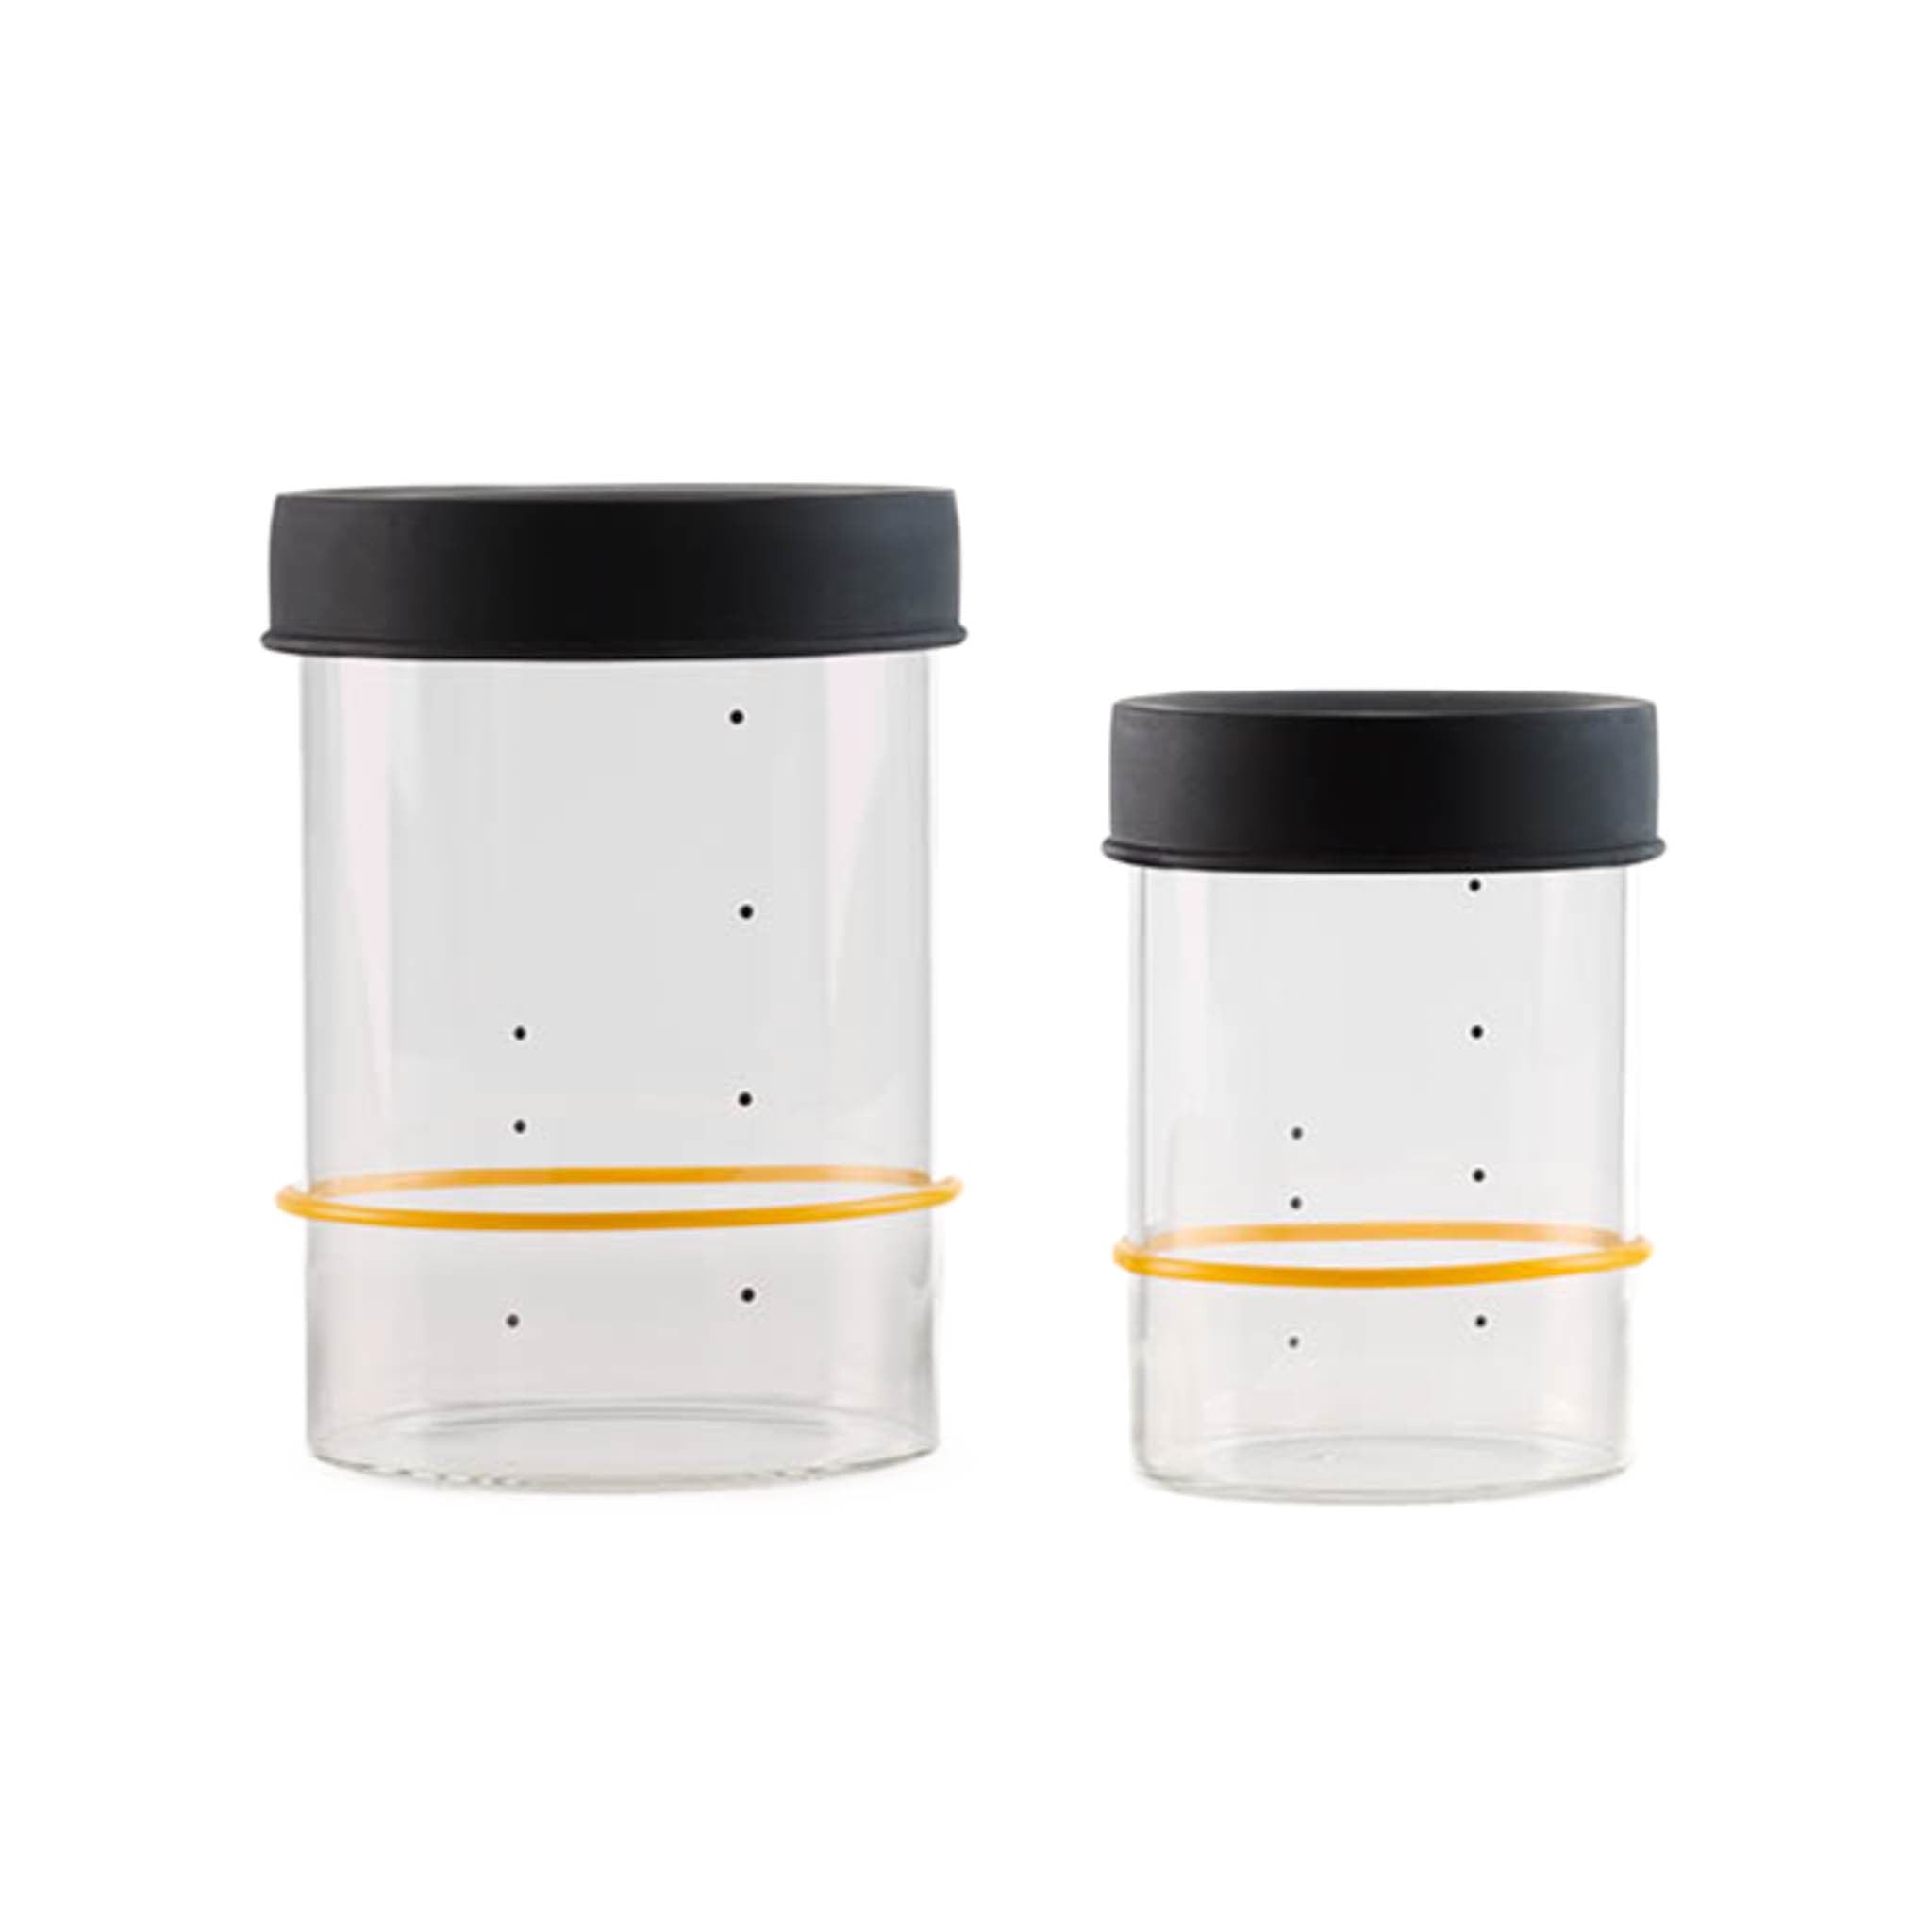 Sourhouse Starter Jar, Quart